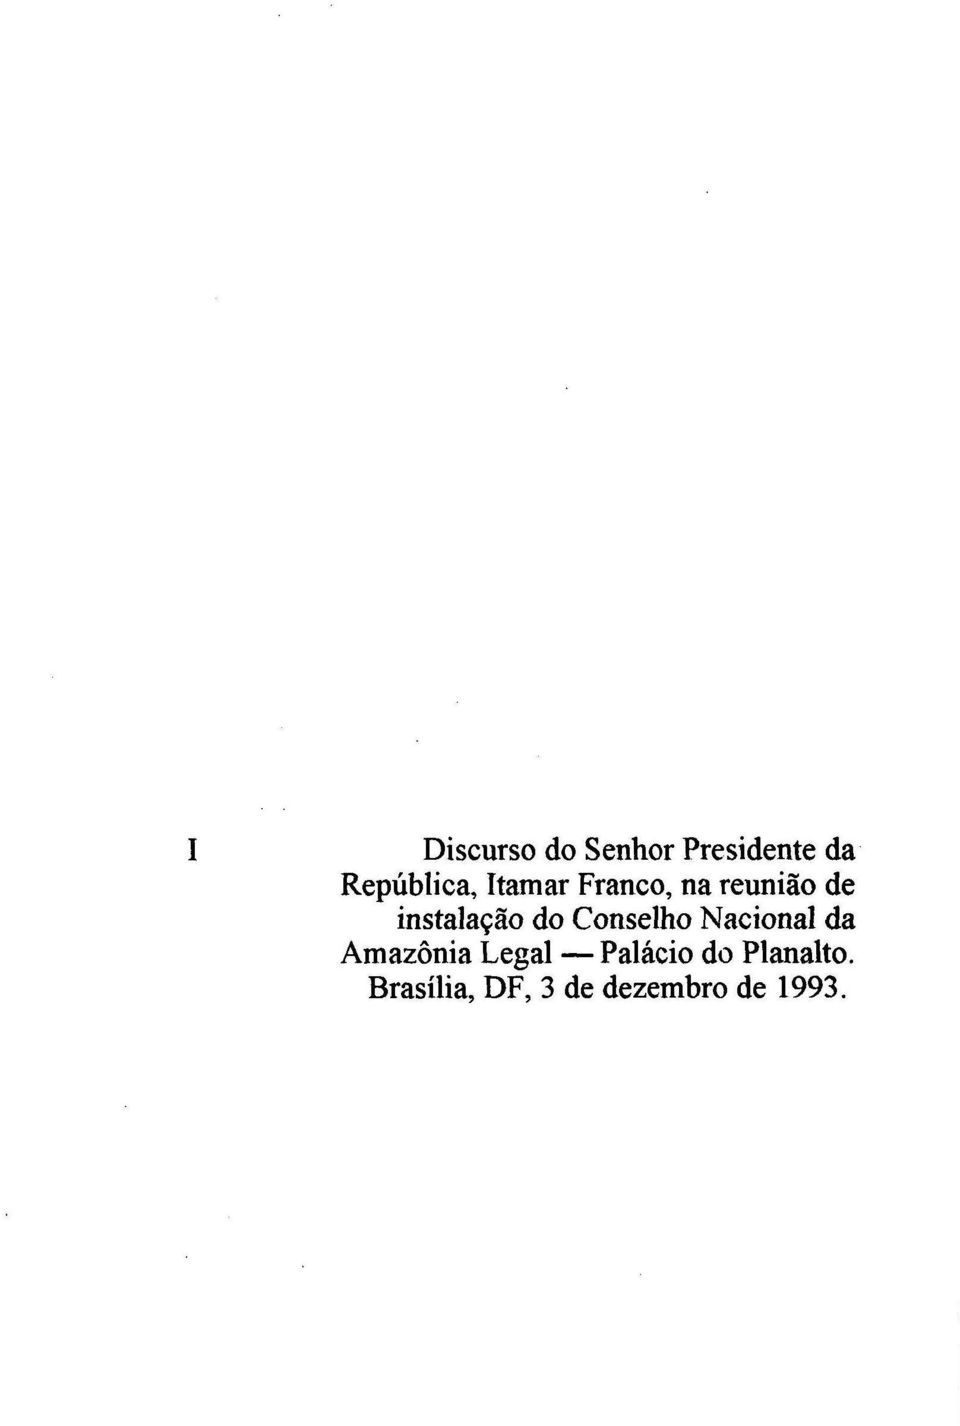 Conselho Nacional da Amazónia Legal Palácio